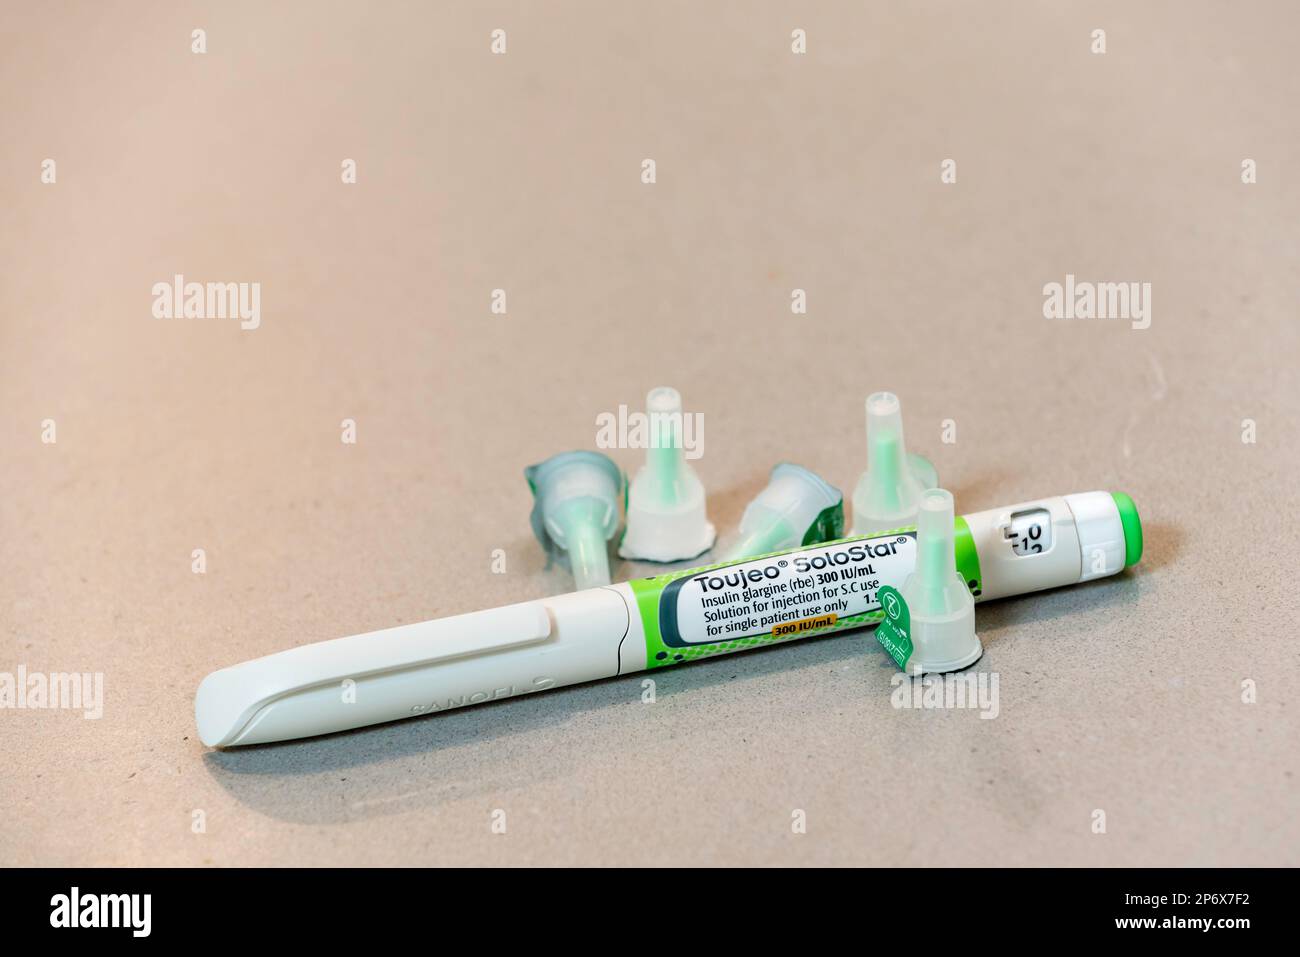 Sanofi insulin glargine drug Toujeo a log acting insulin used by Type1 diabetics, and BD needle tips Stock Photo